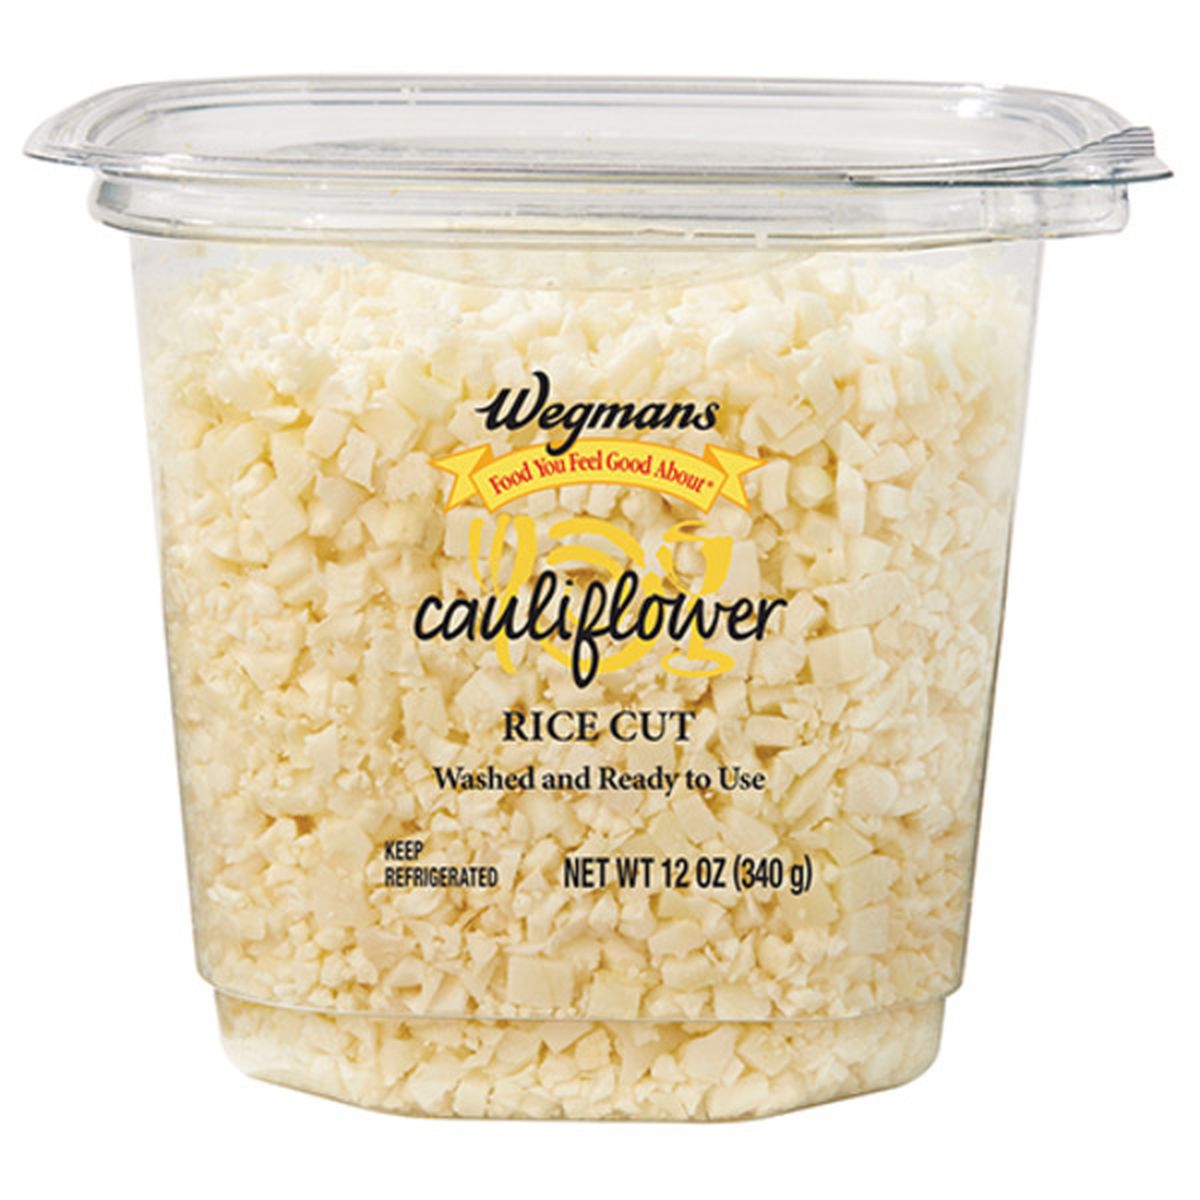 Calories in Wegmans Cauliflower Rice